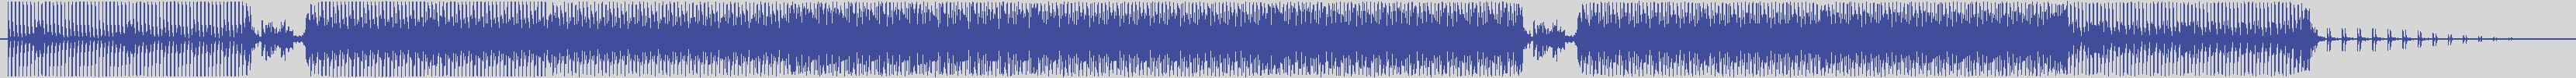 nf_boyz_records [NFY029] Voicee - I Remember [Vk Deep Mix] audio wave form